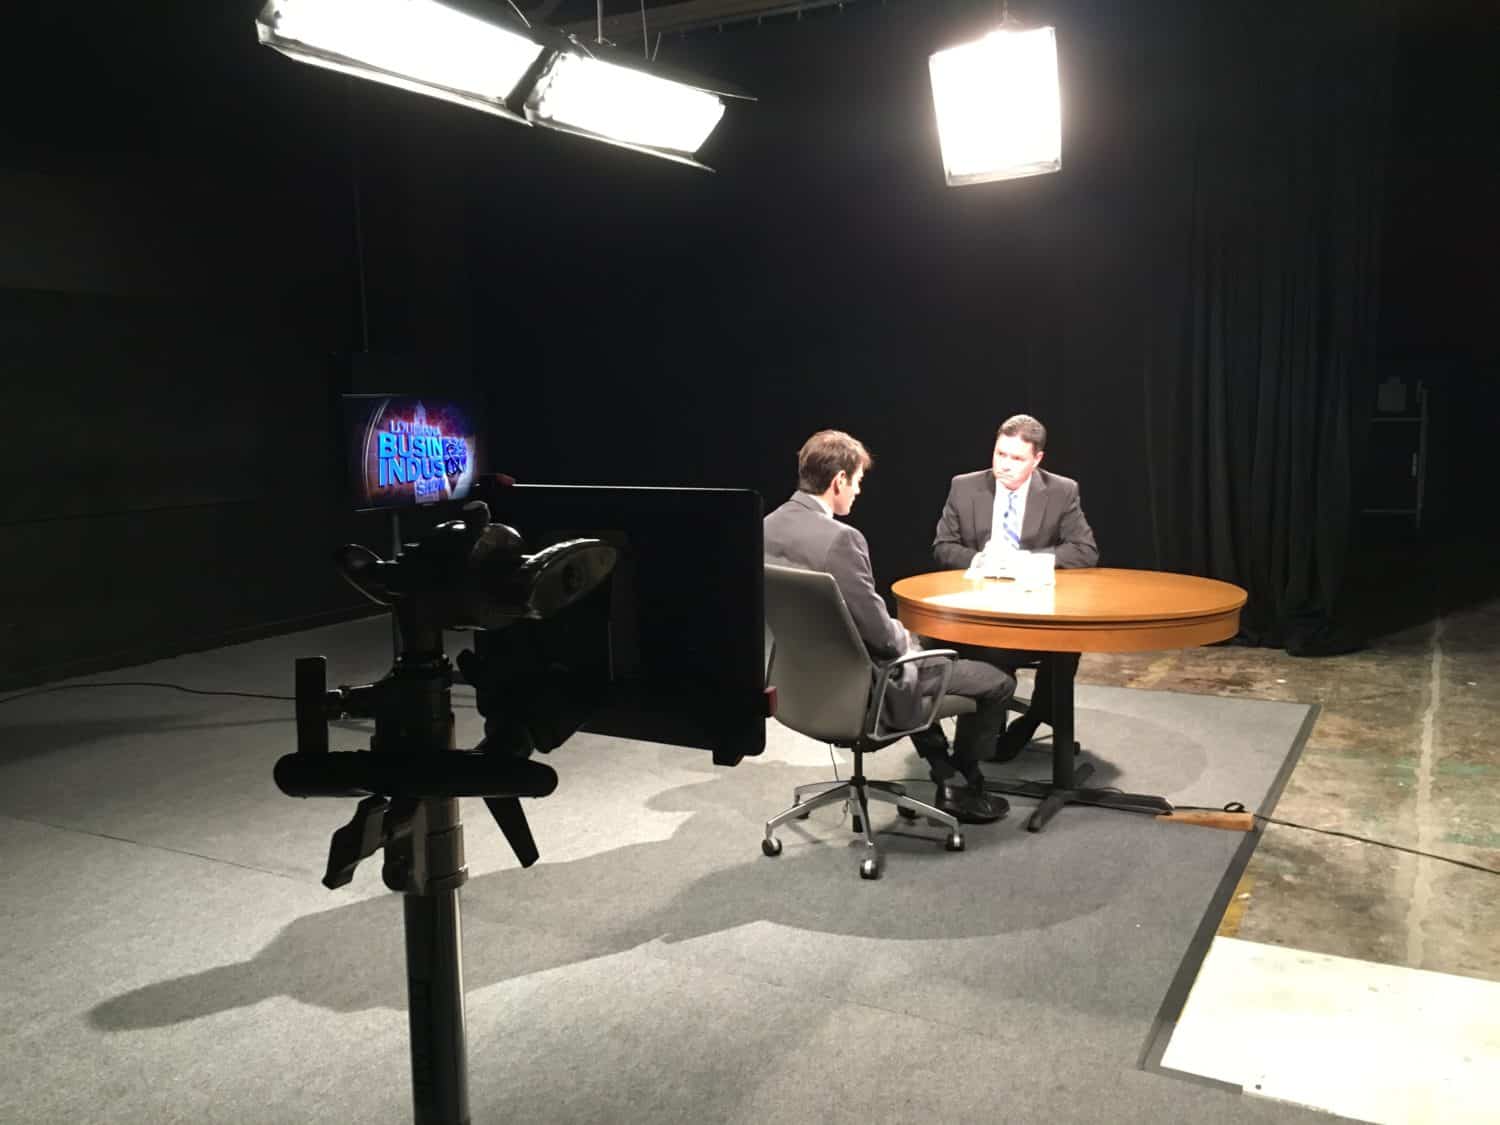 A newsman interviews a businessman in a dark studio